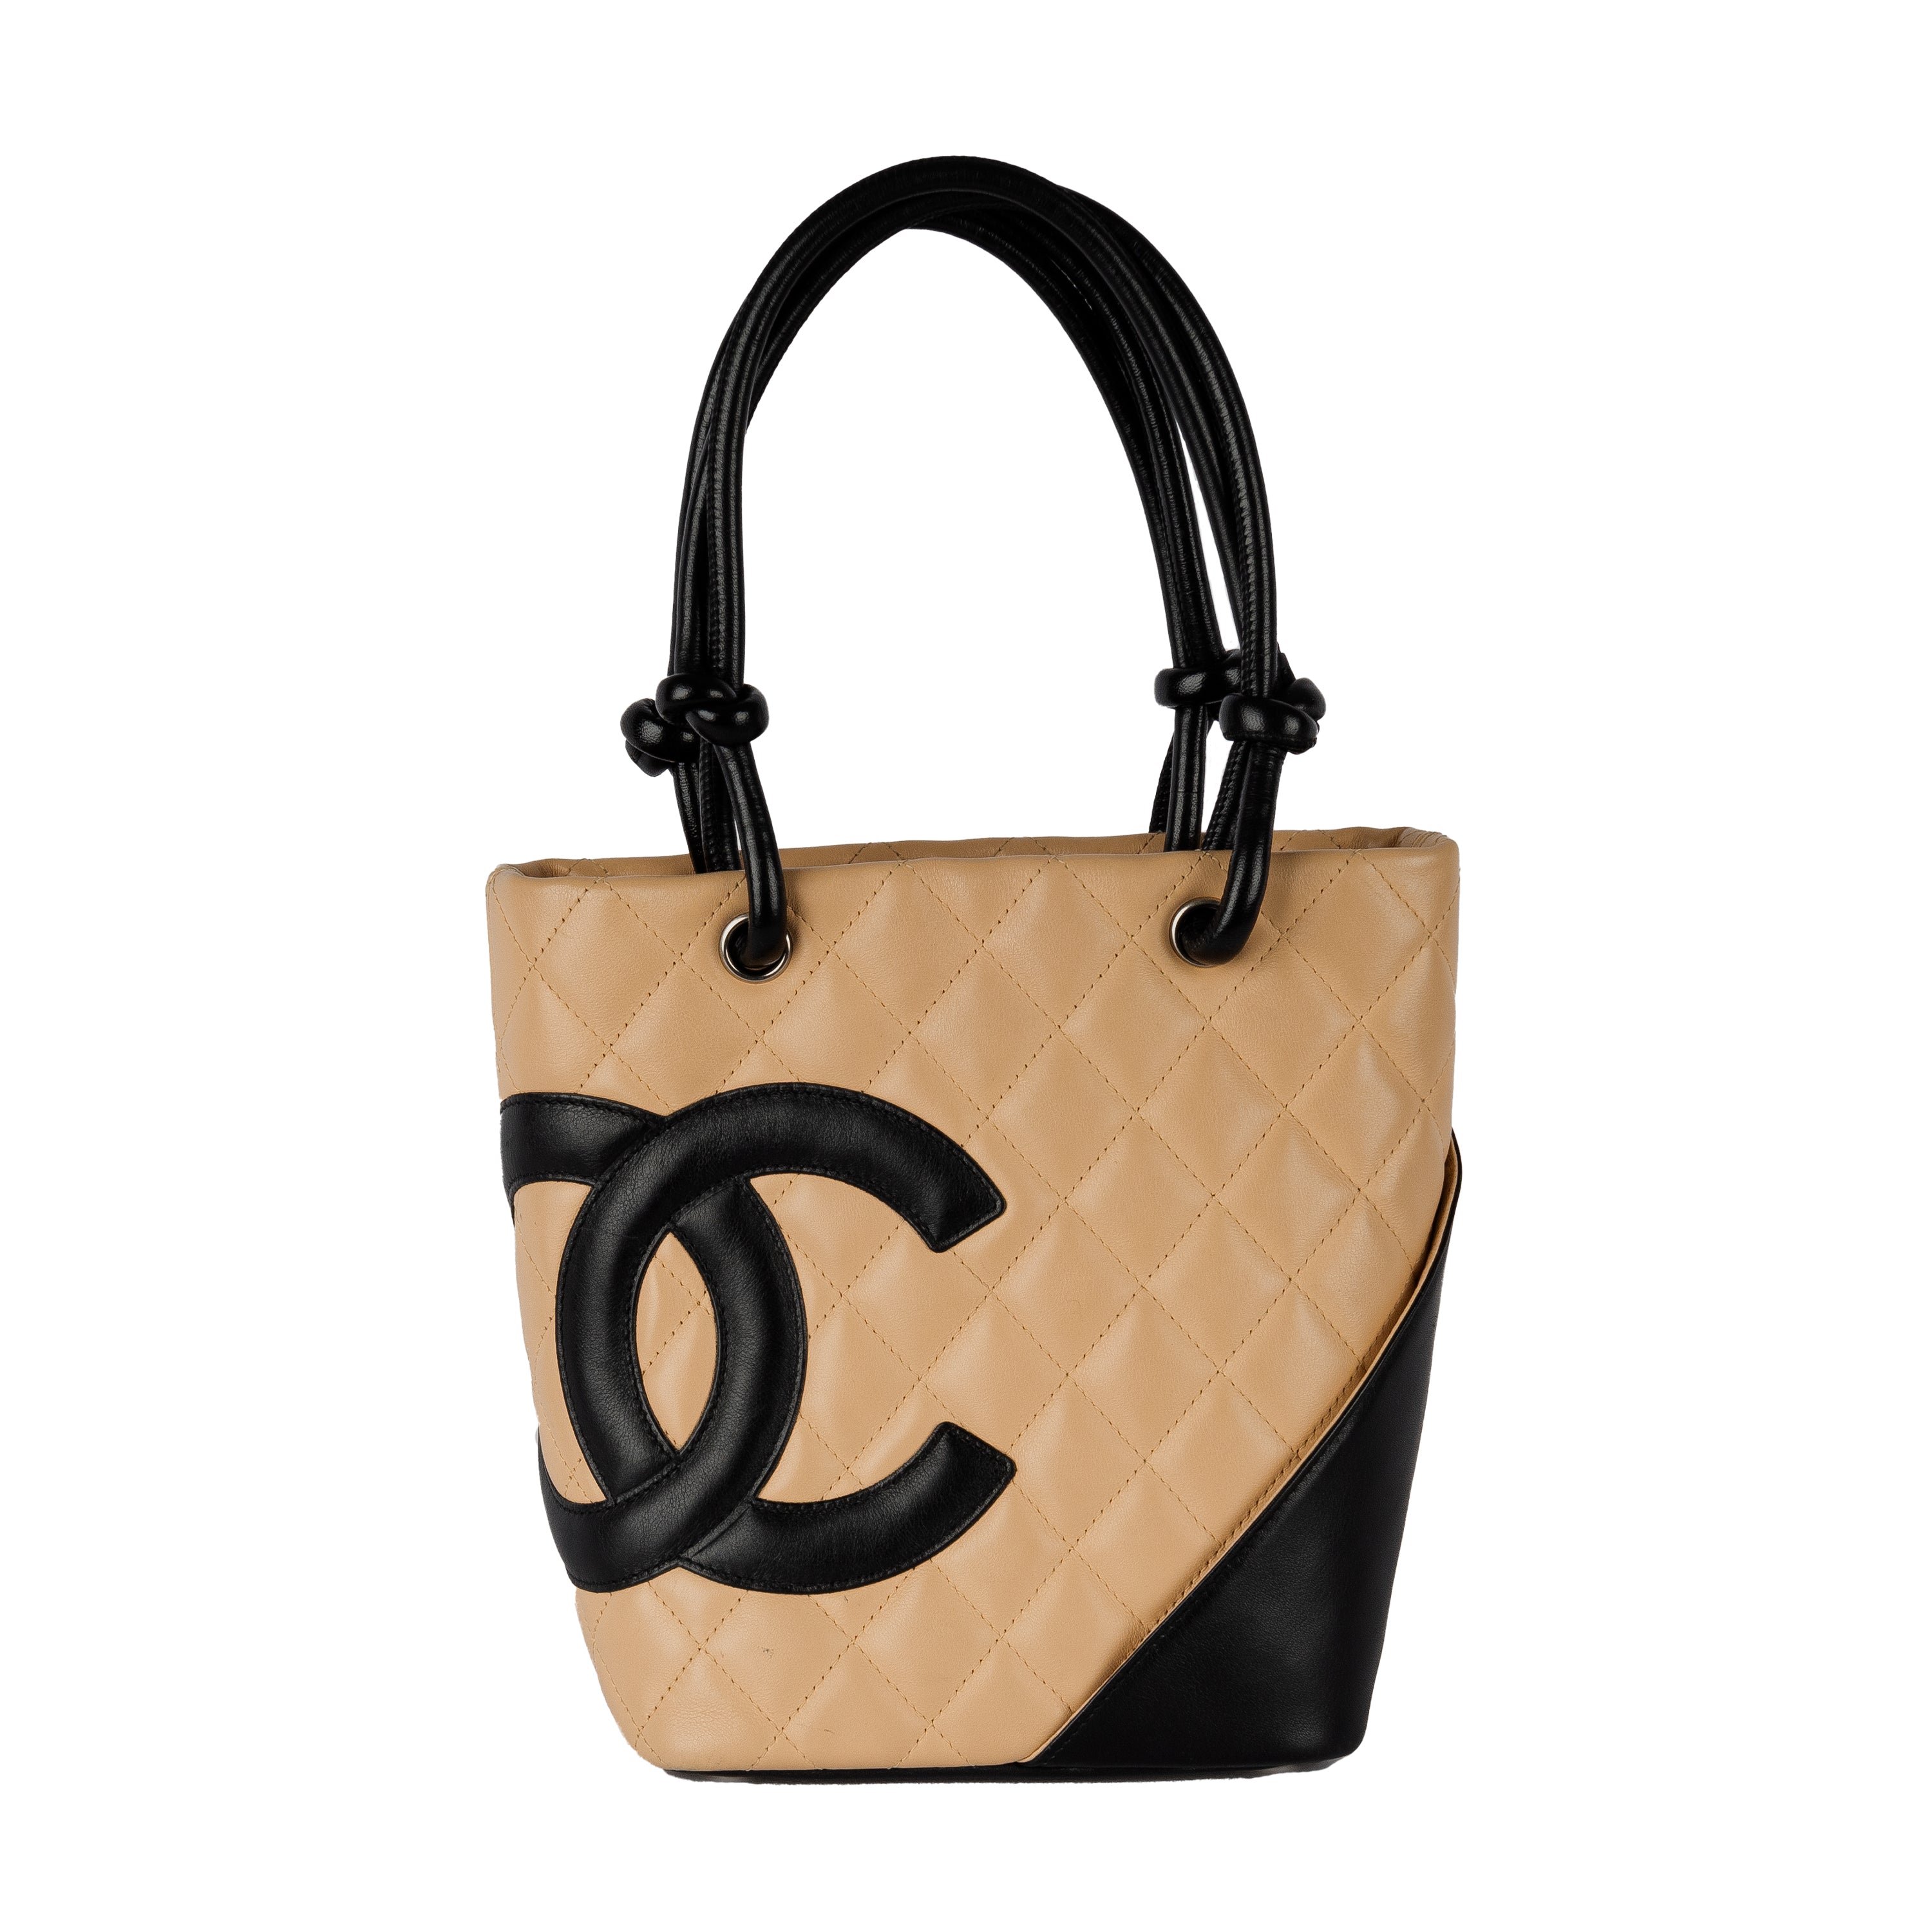 CHANEL, Bags, Chanel Small Cambon Tote